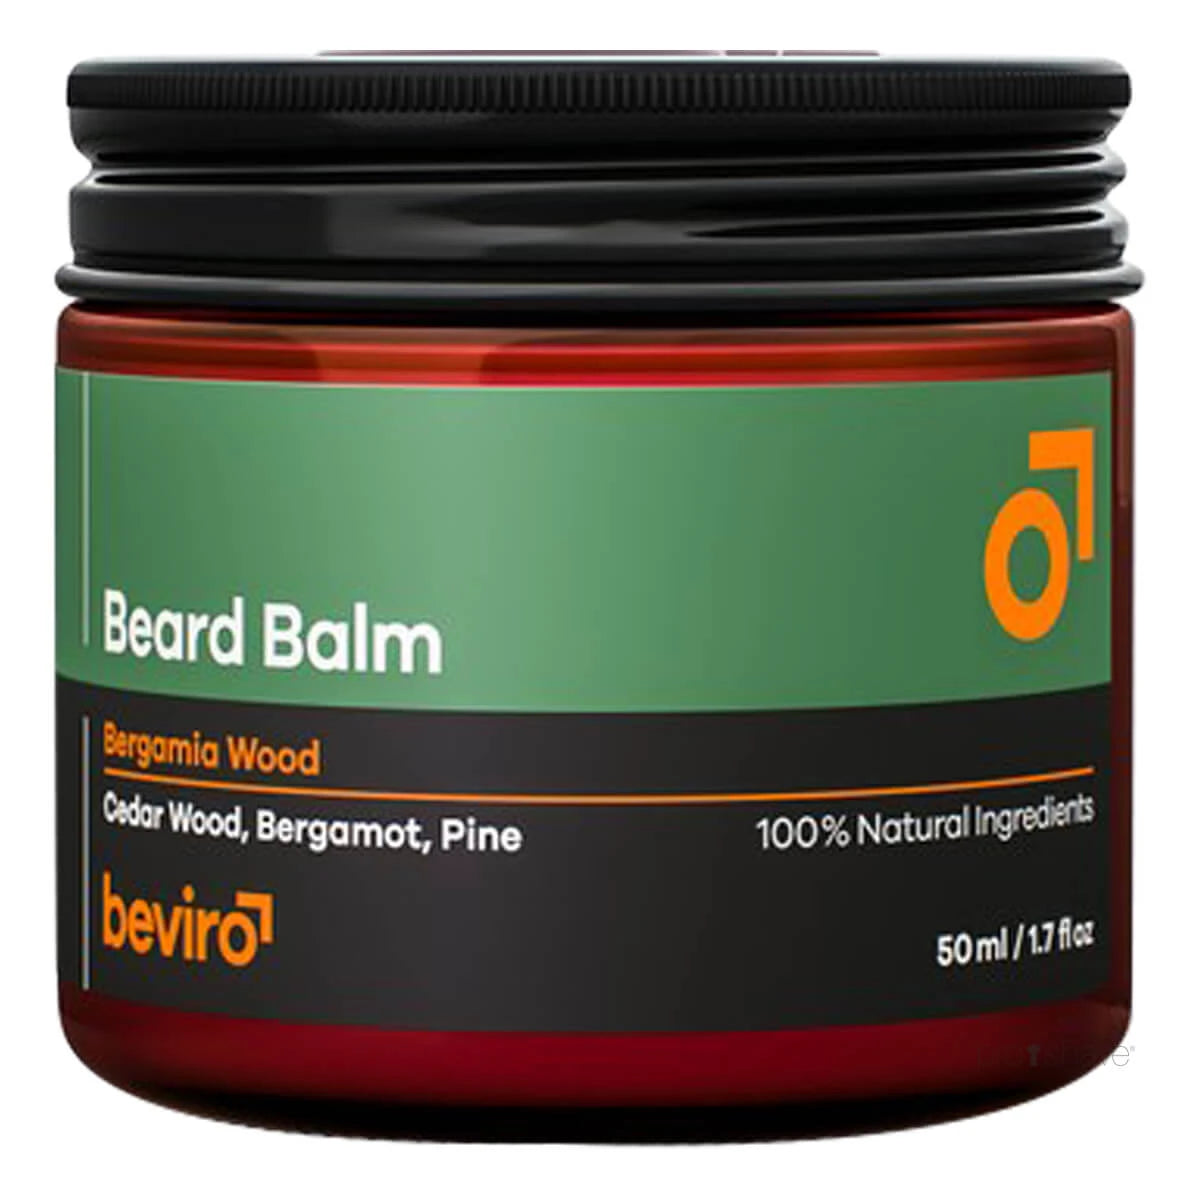 Beviro, Beard Balm- Bergamia Wood